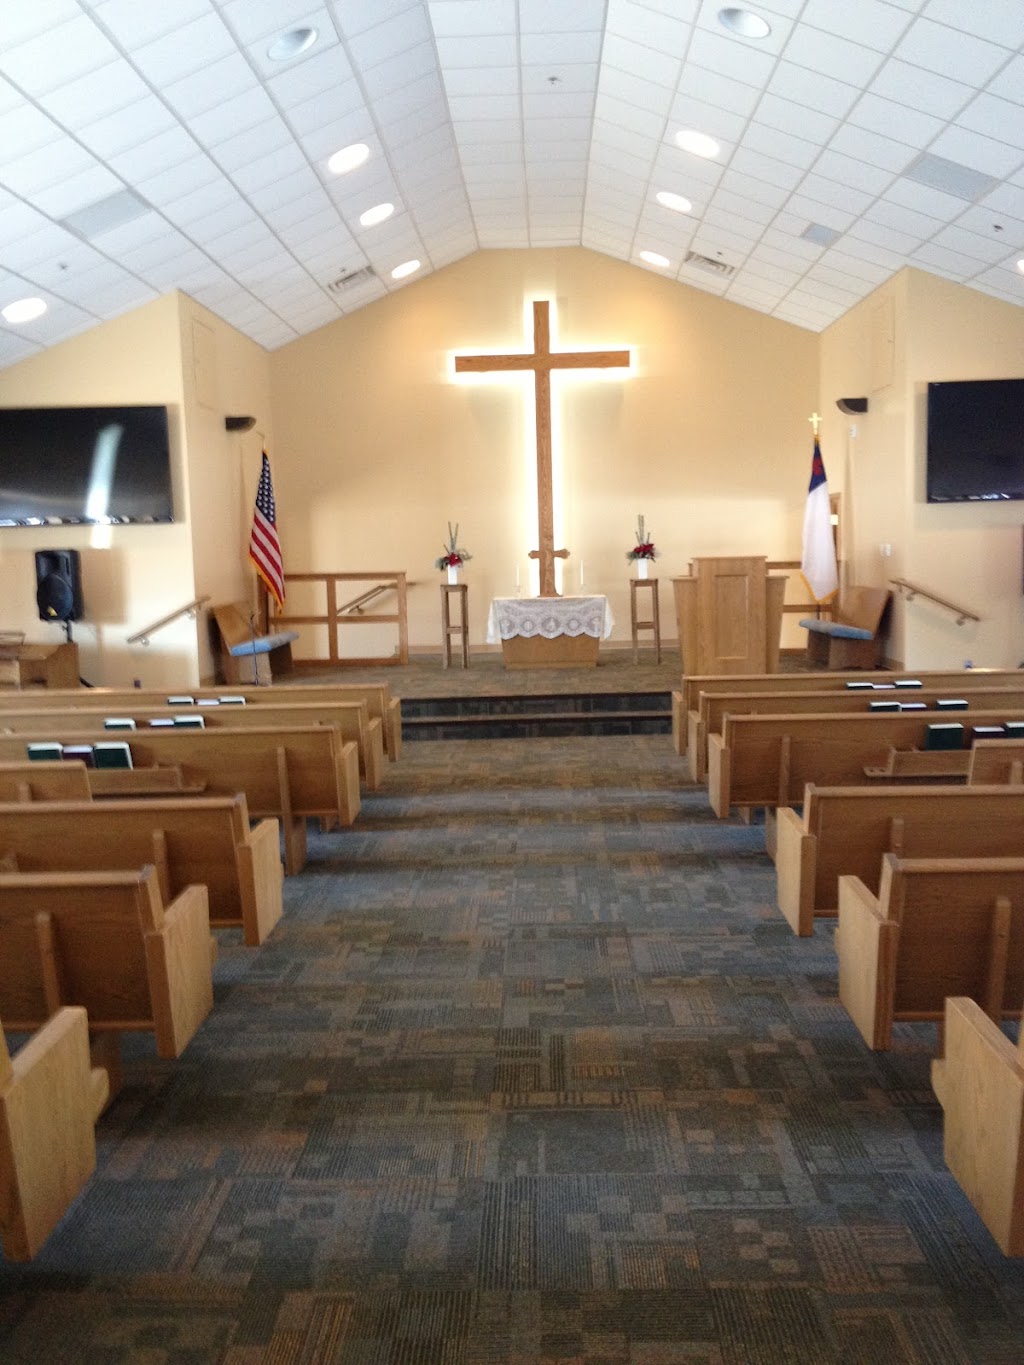 Word Of Hope Lutheran Church - LCMC | 157 S 22nd St, Ashland, NE 68003, USA | Phone: (402) 944-2060